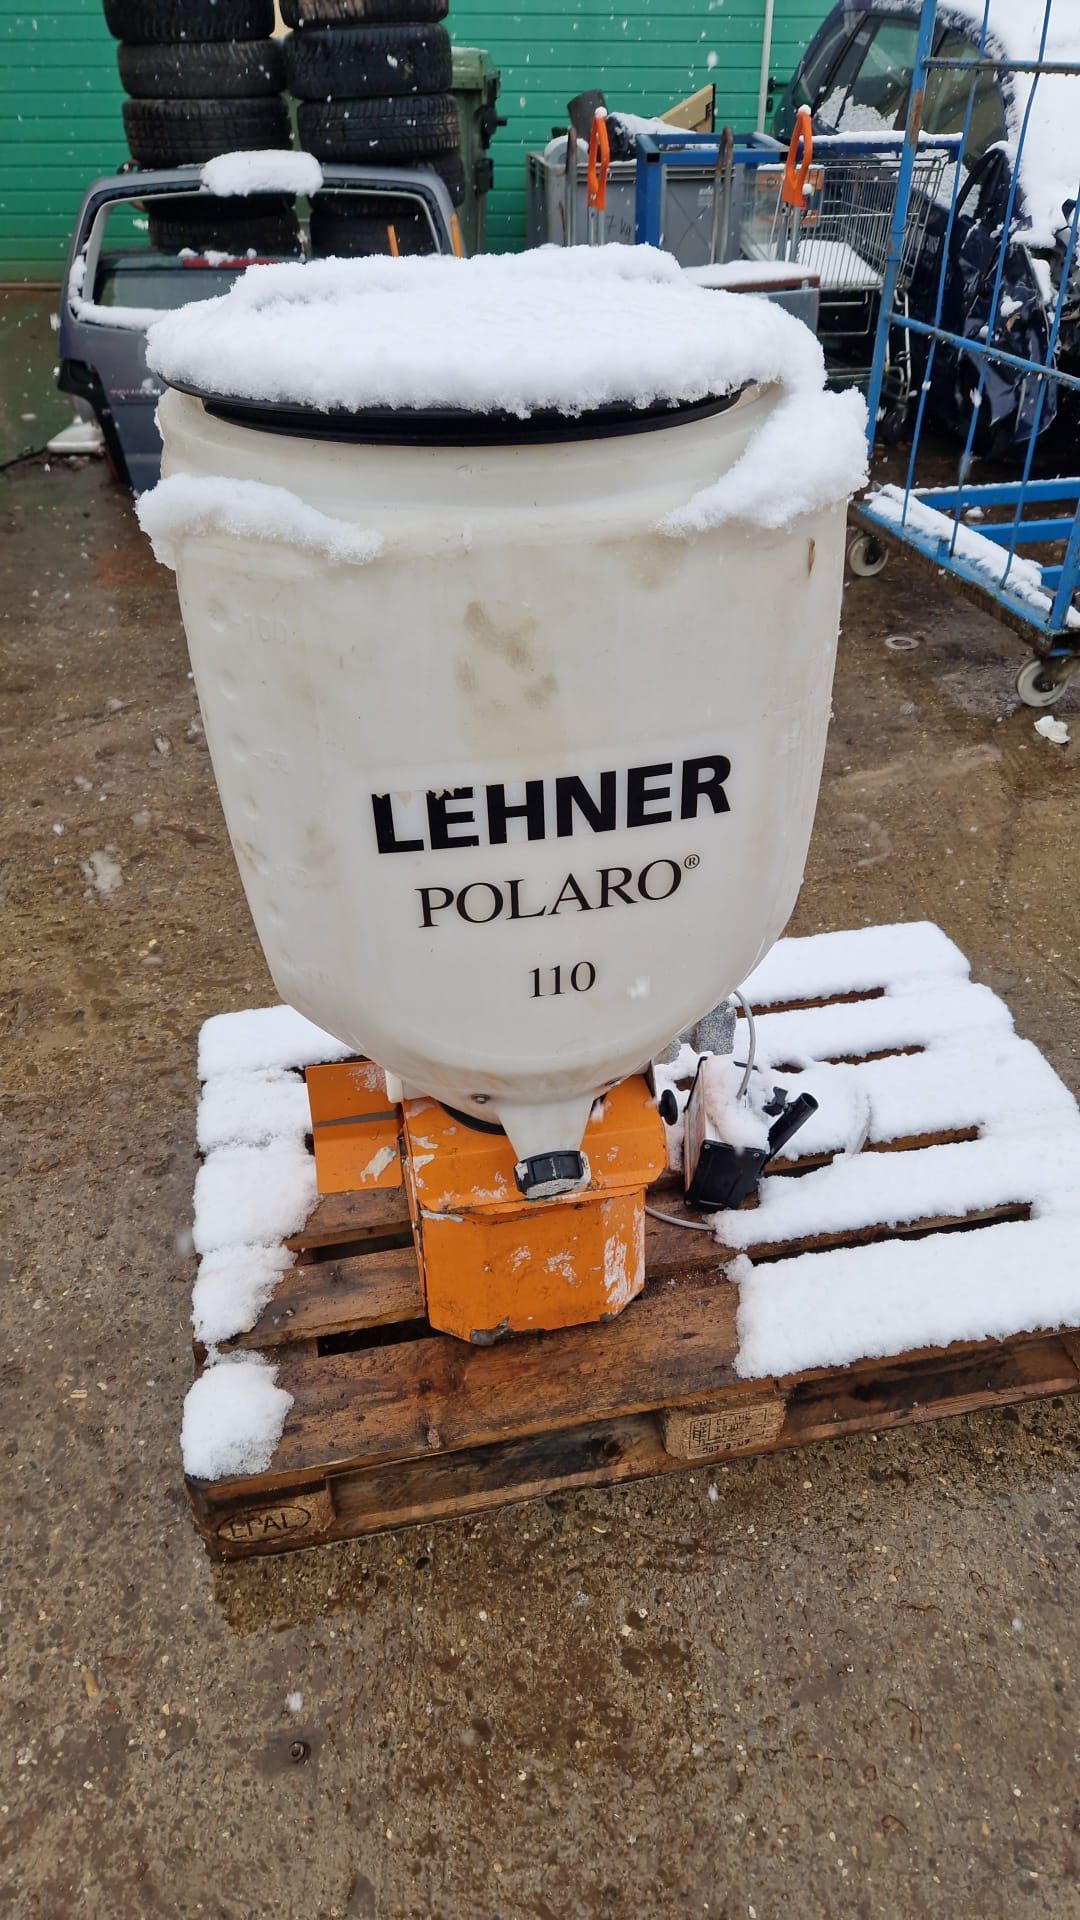 Lehner Polaro 110 piaskarka posypywarka mało używany stan bdb